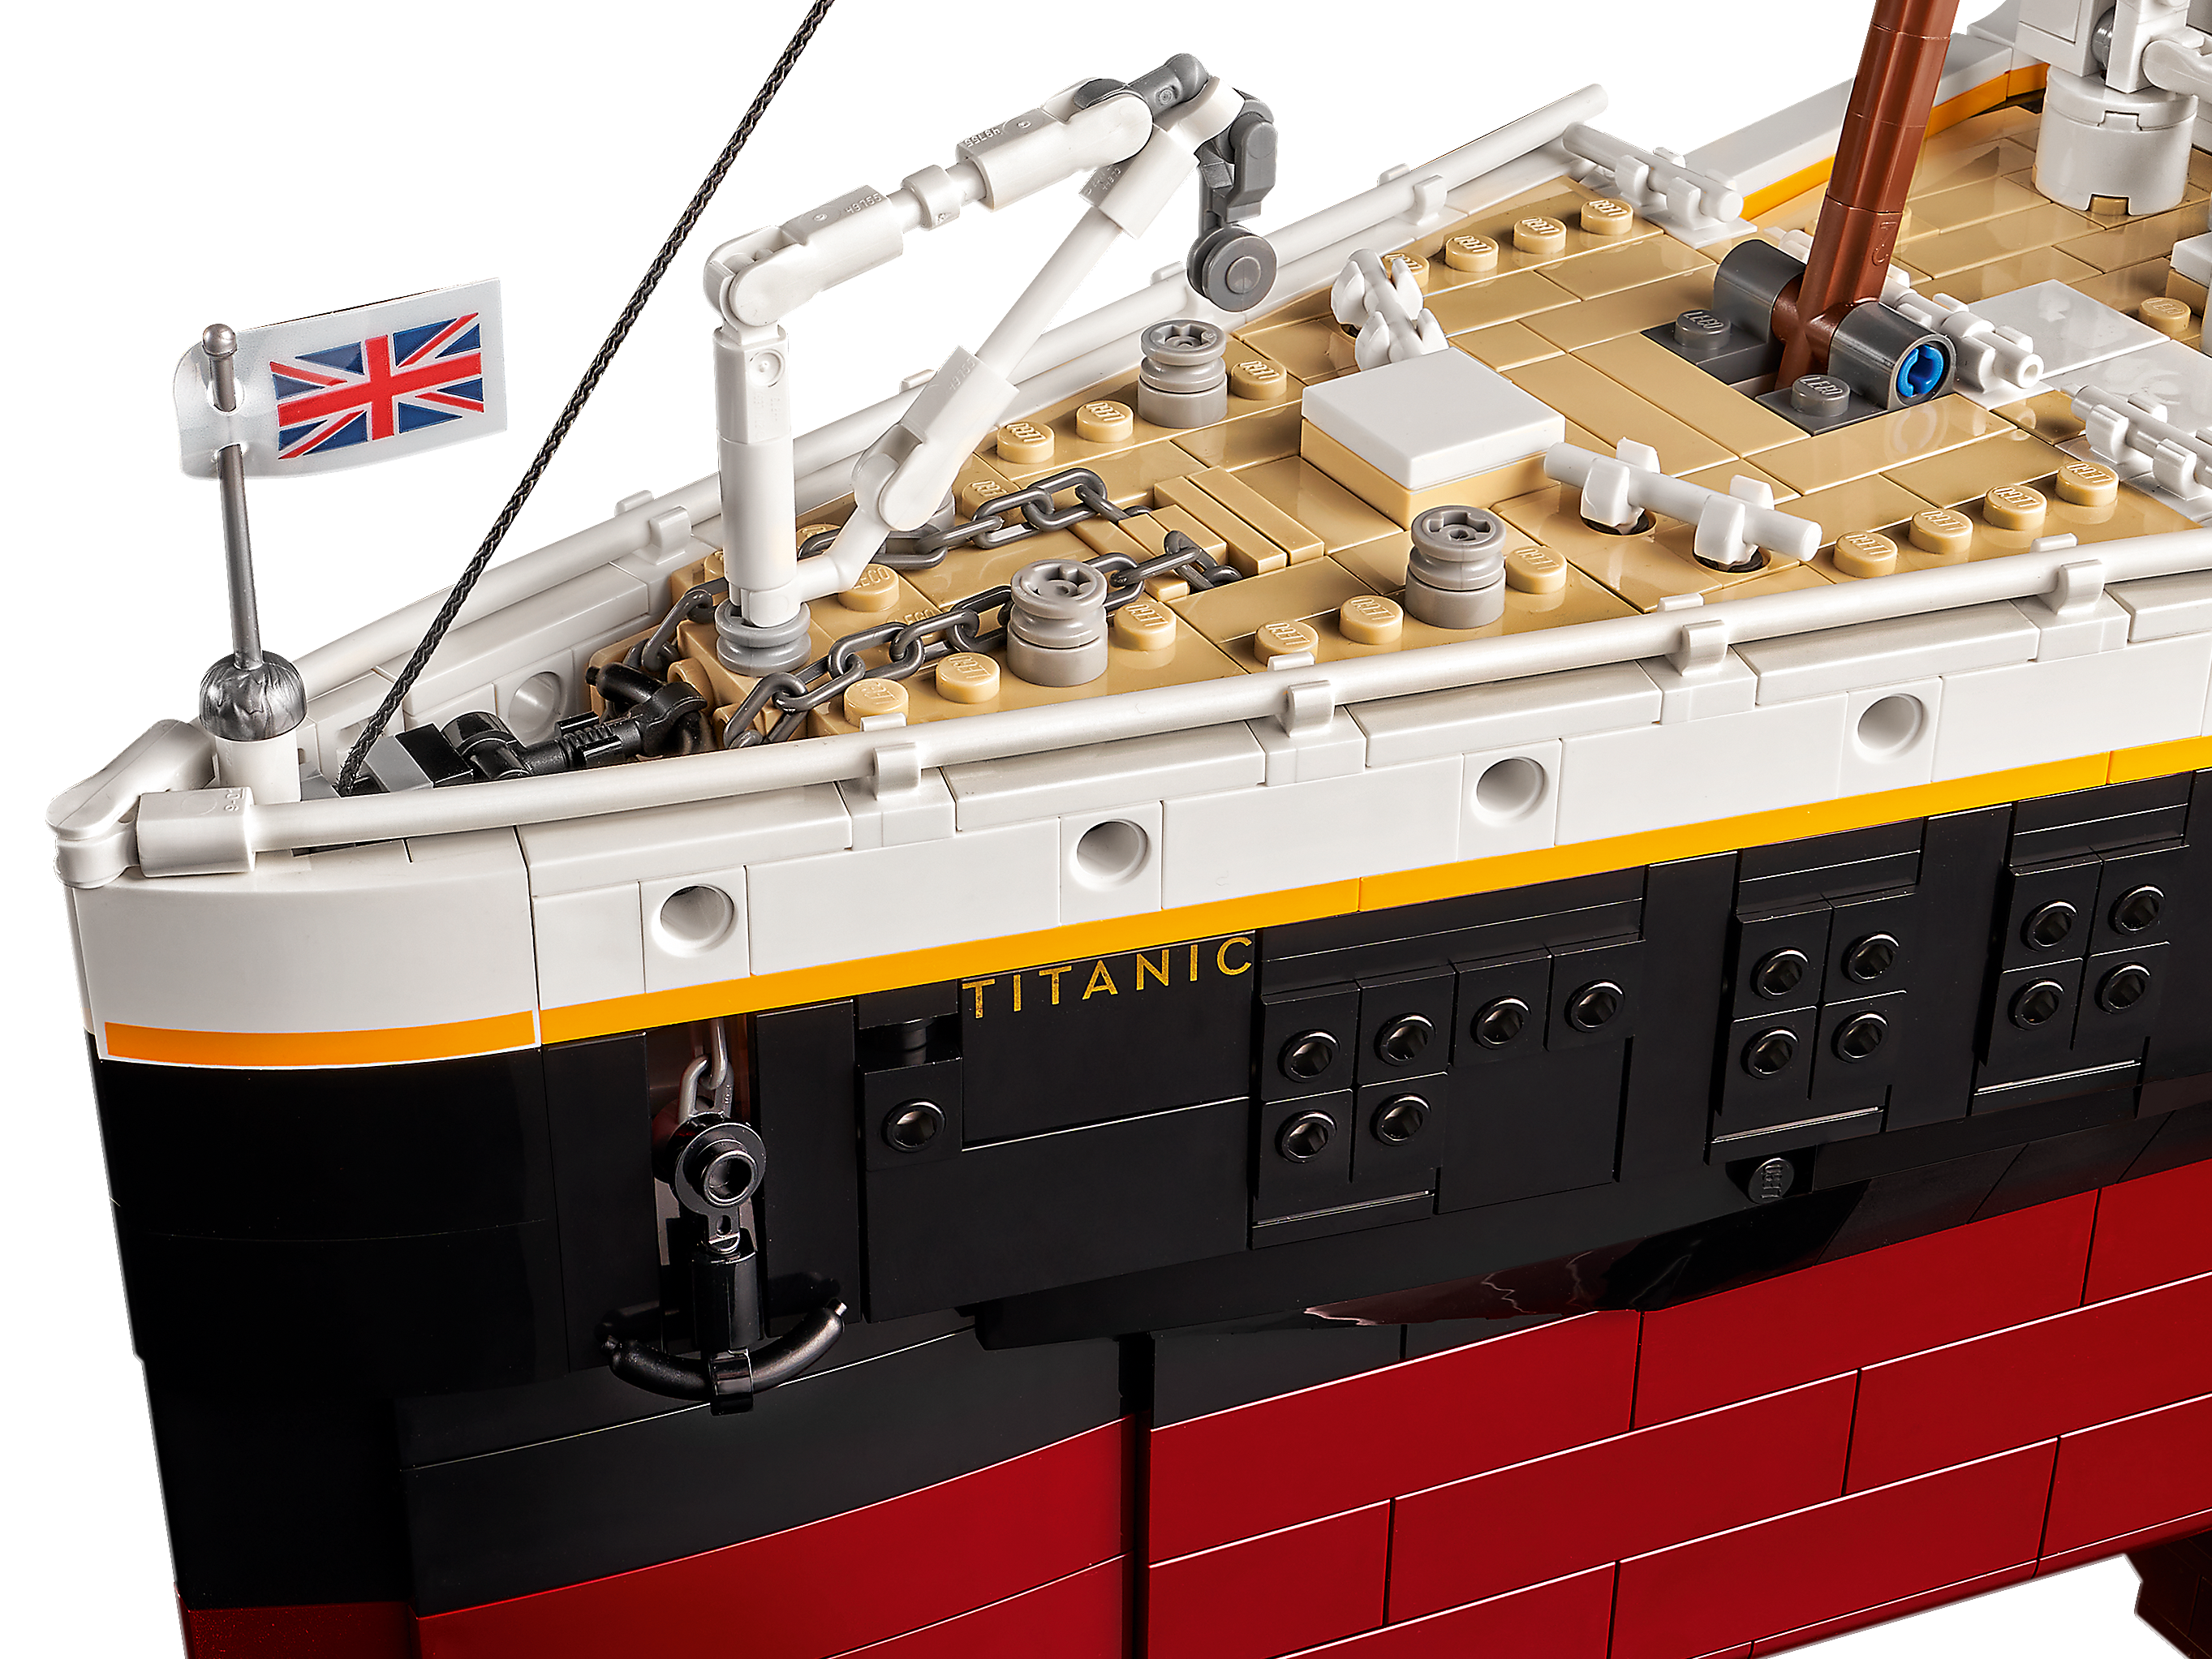 LEGO Icons: Titanic - 9090 Piece Building Kit [LEGO, #10294, Ages 18+]